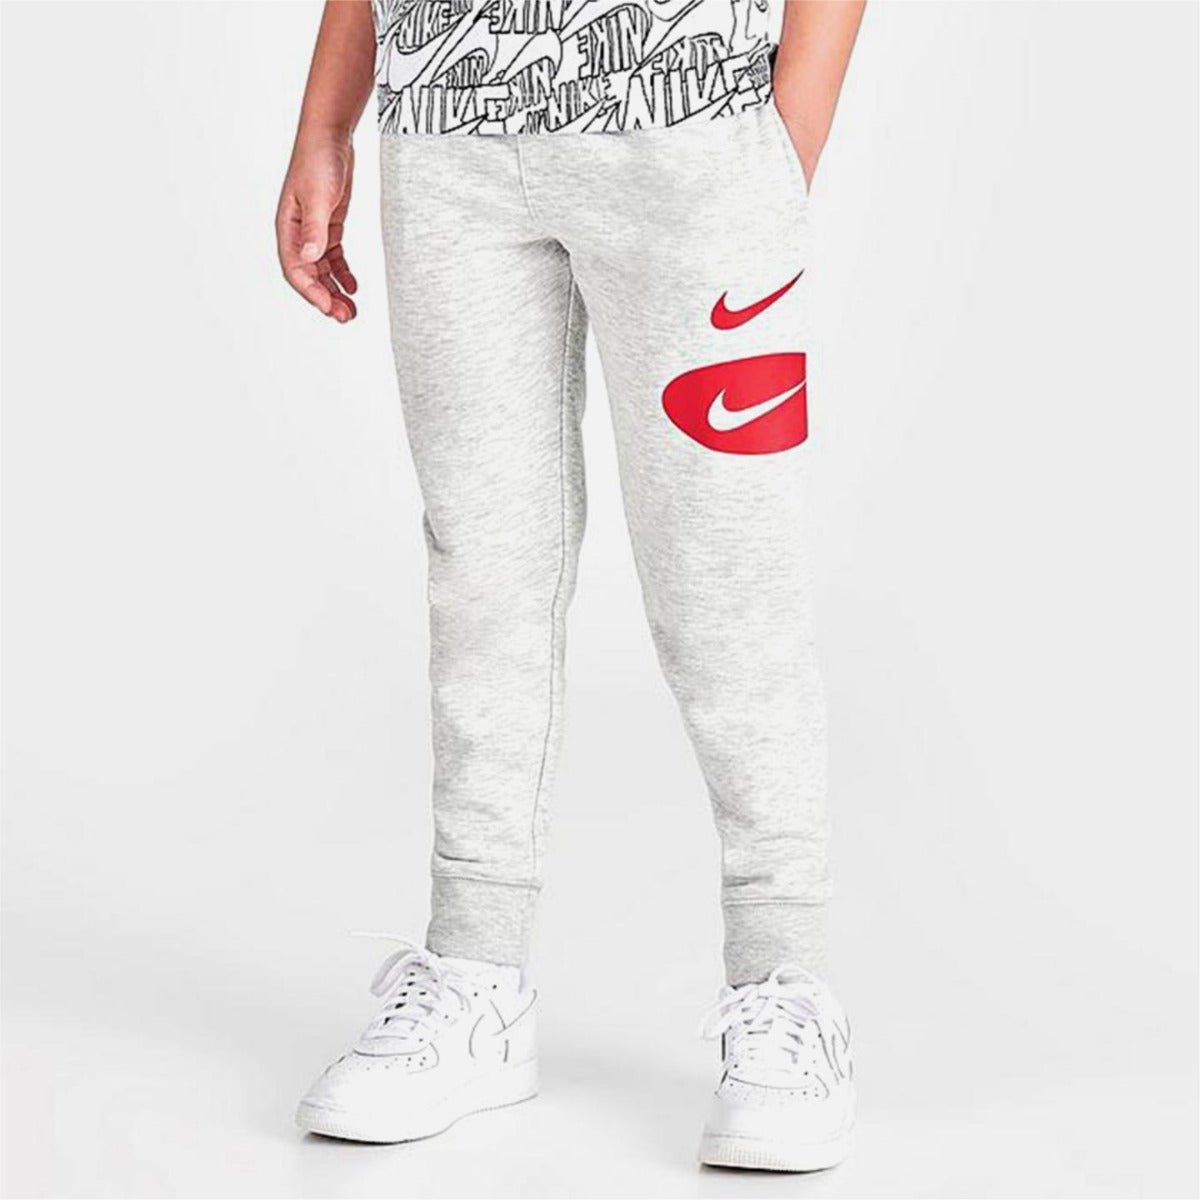 Nike Sportswear Hose Kinder – Grau/Rot